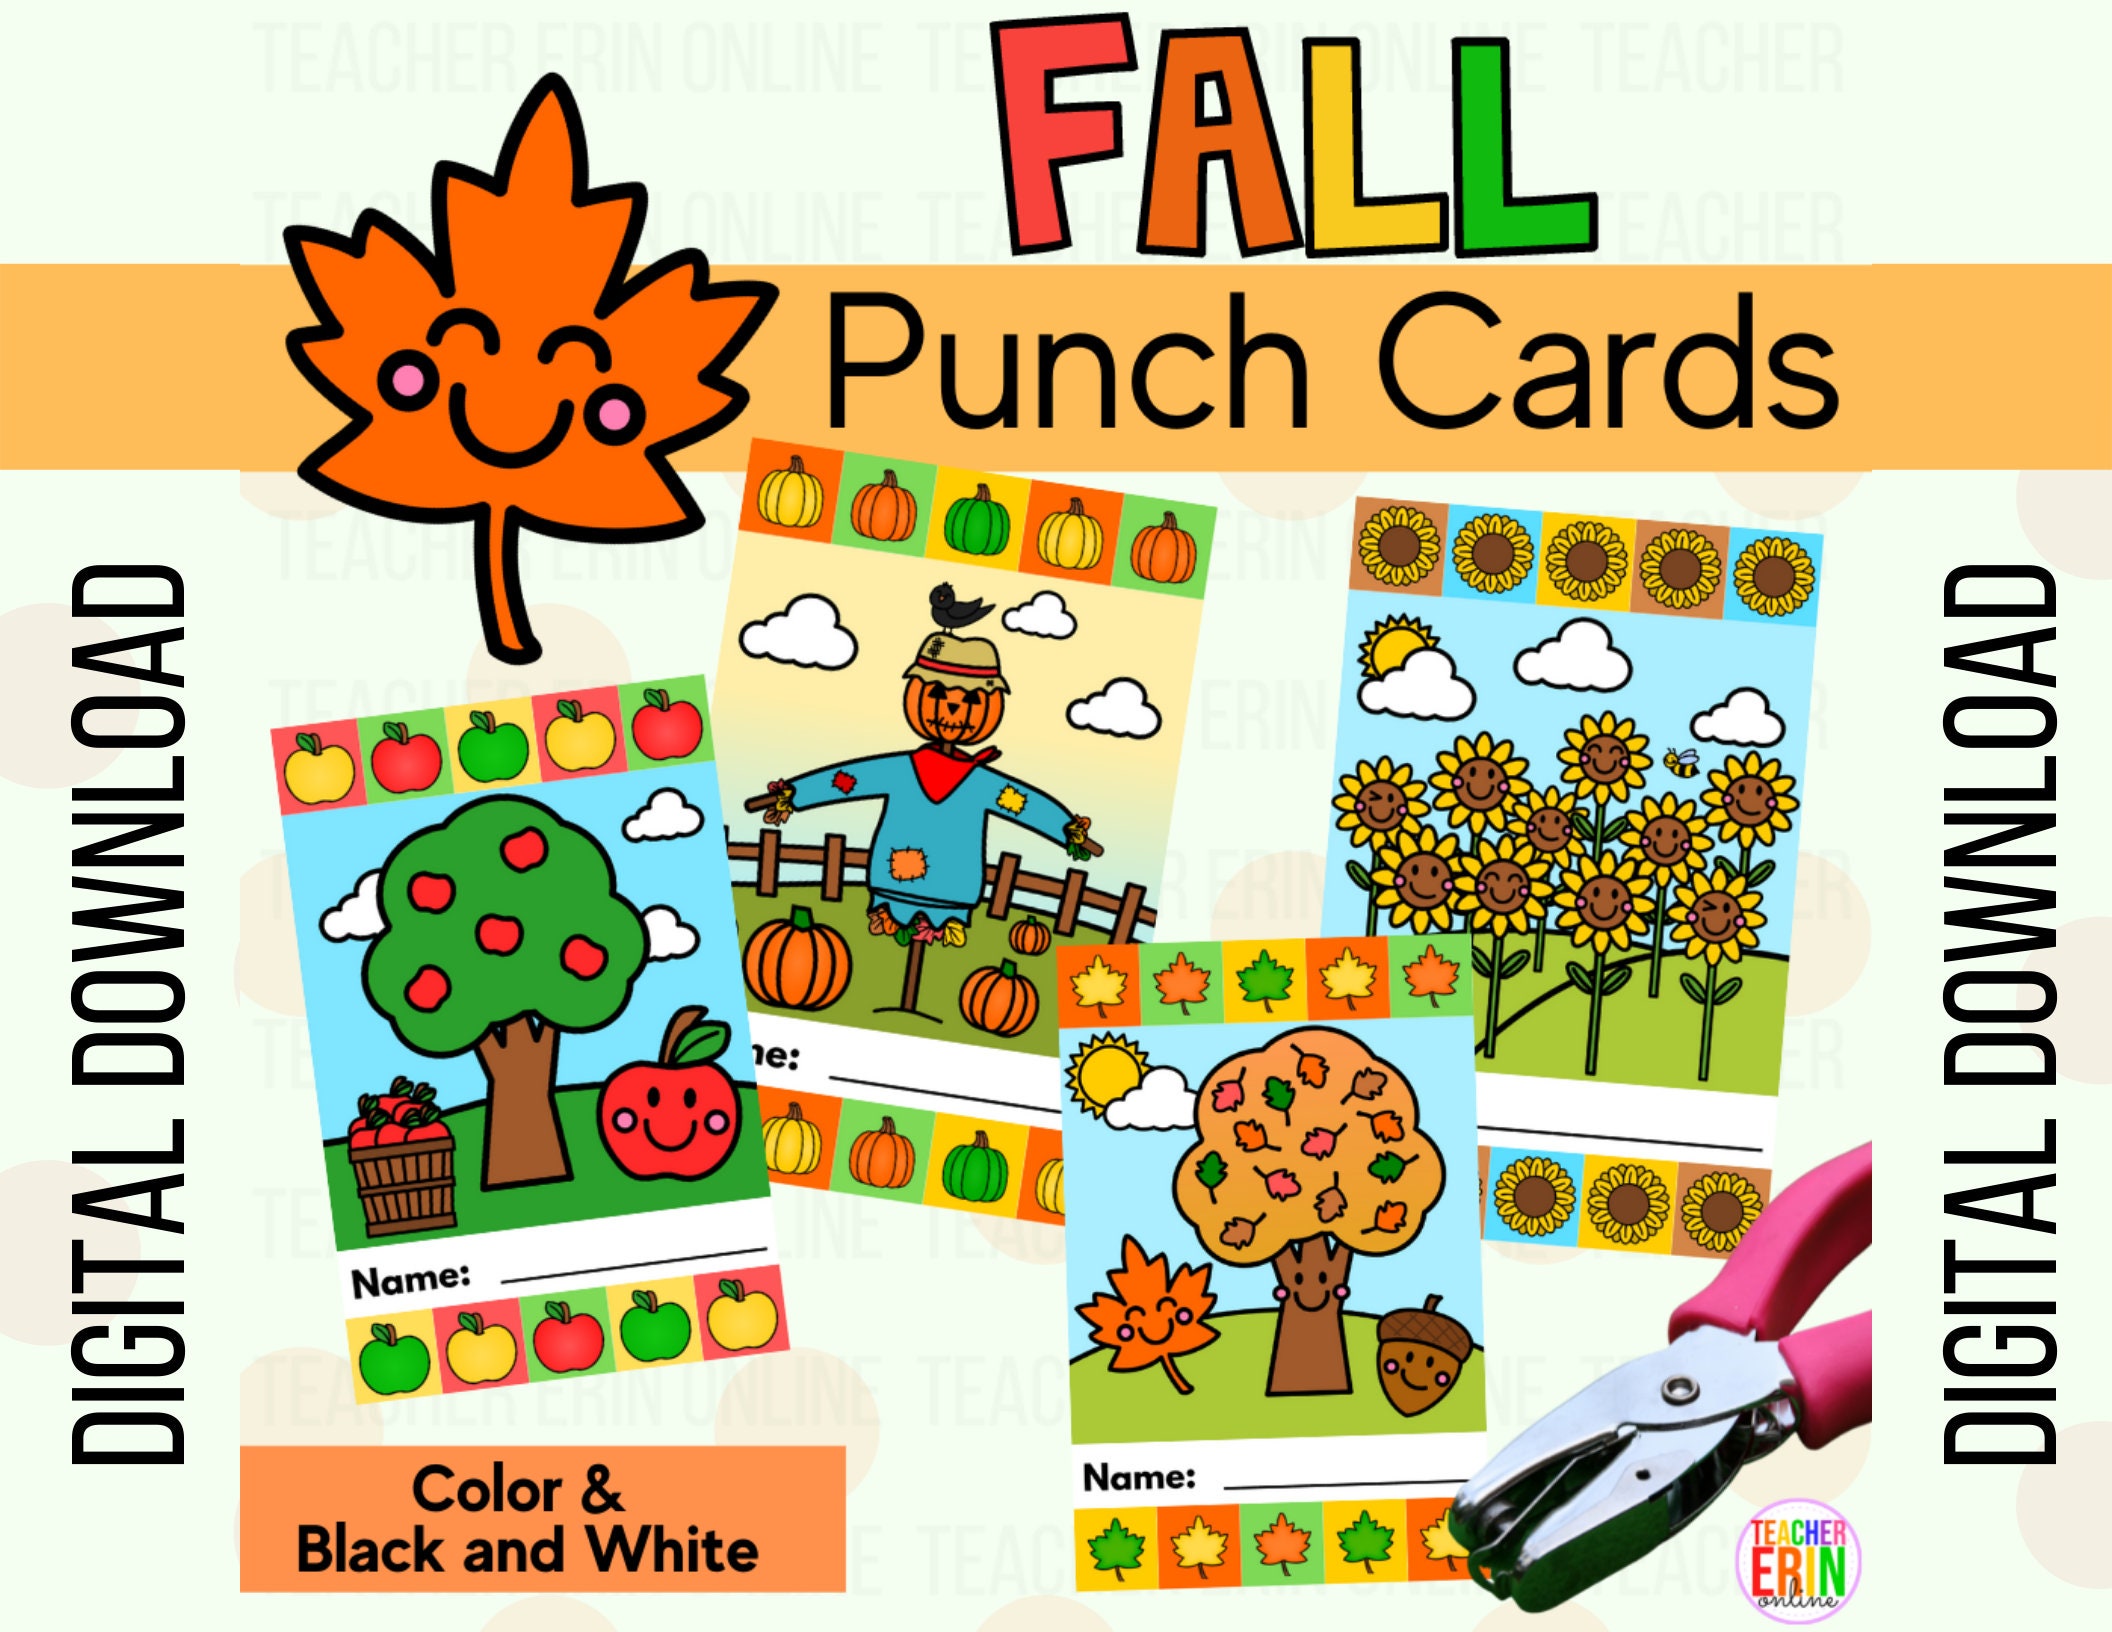 Punch Cards for Classroom Management, Rewards, Behavior